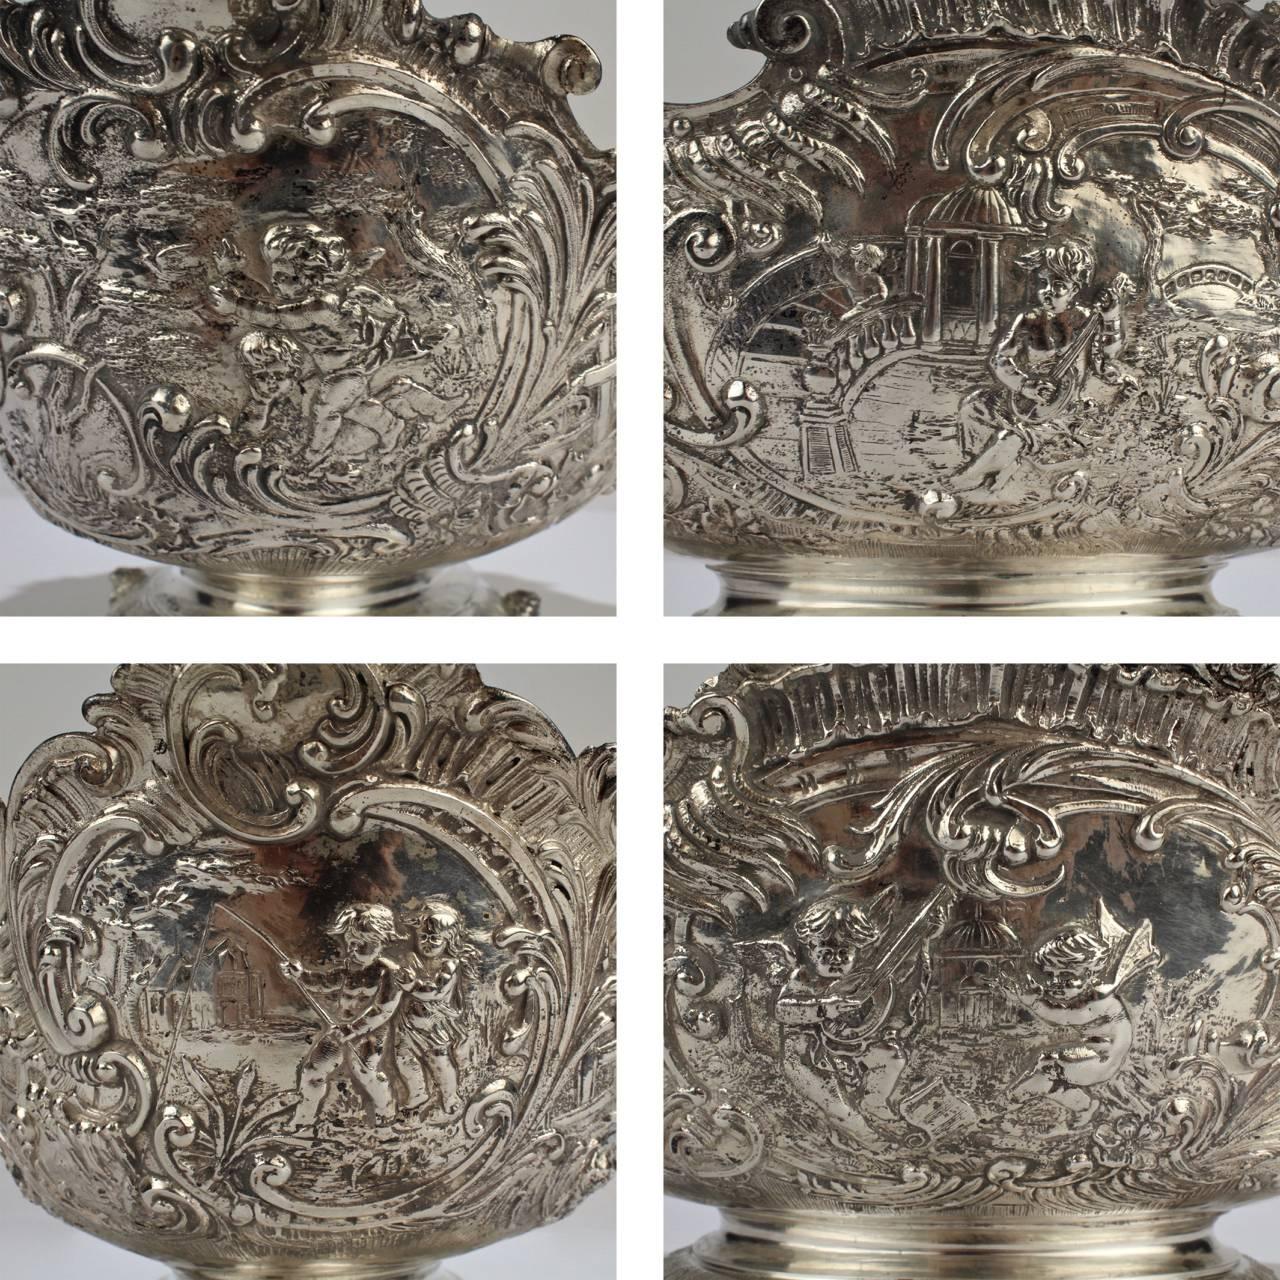 19th Century German Rococo Revival Repoussé 800 Silver Centerpiece or Bowl For Sale 3